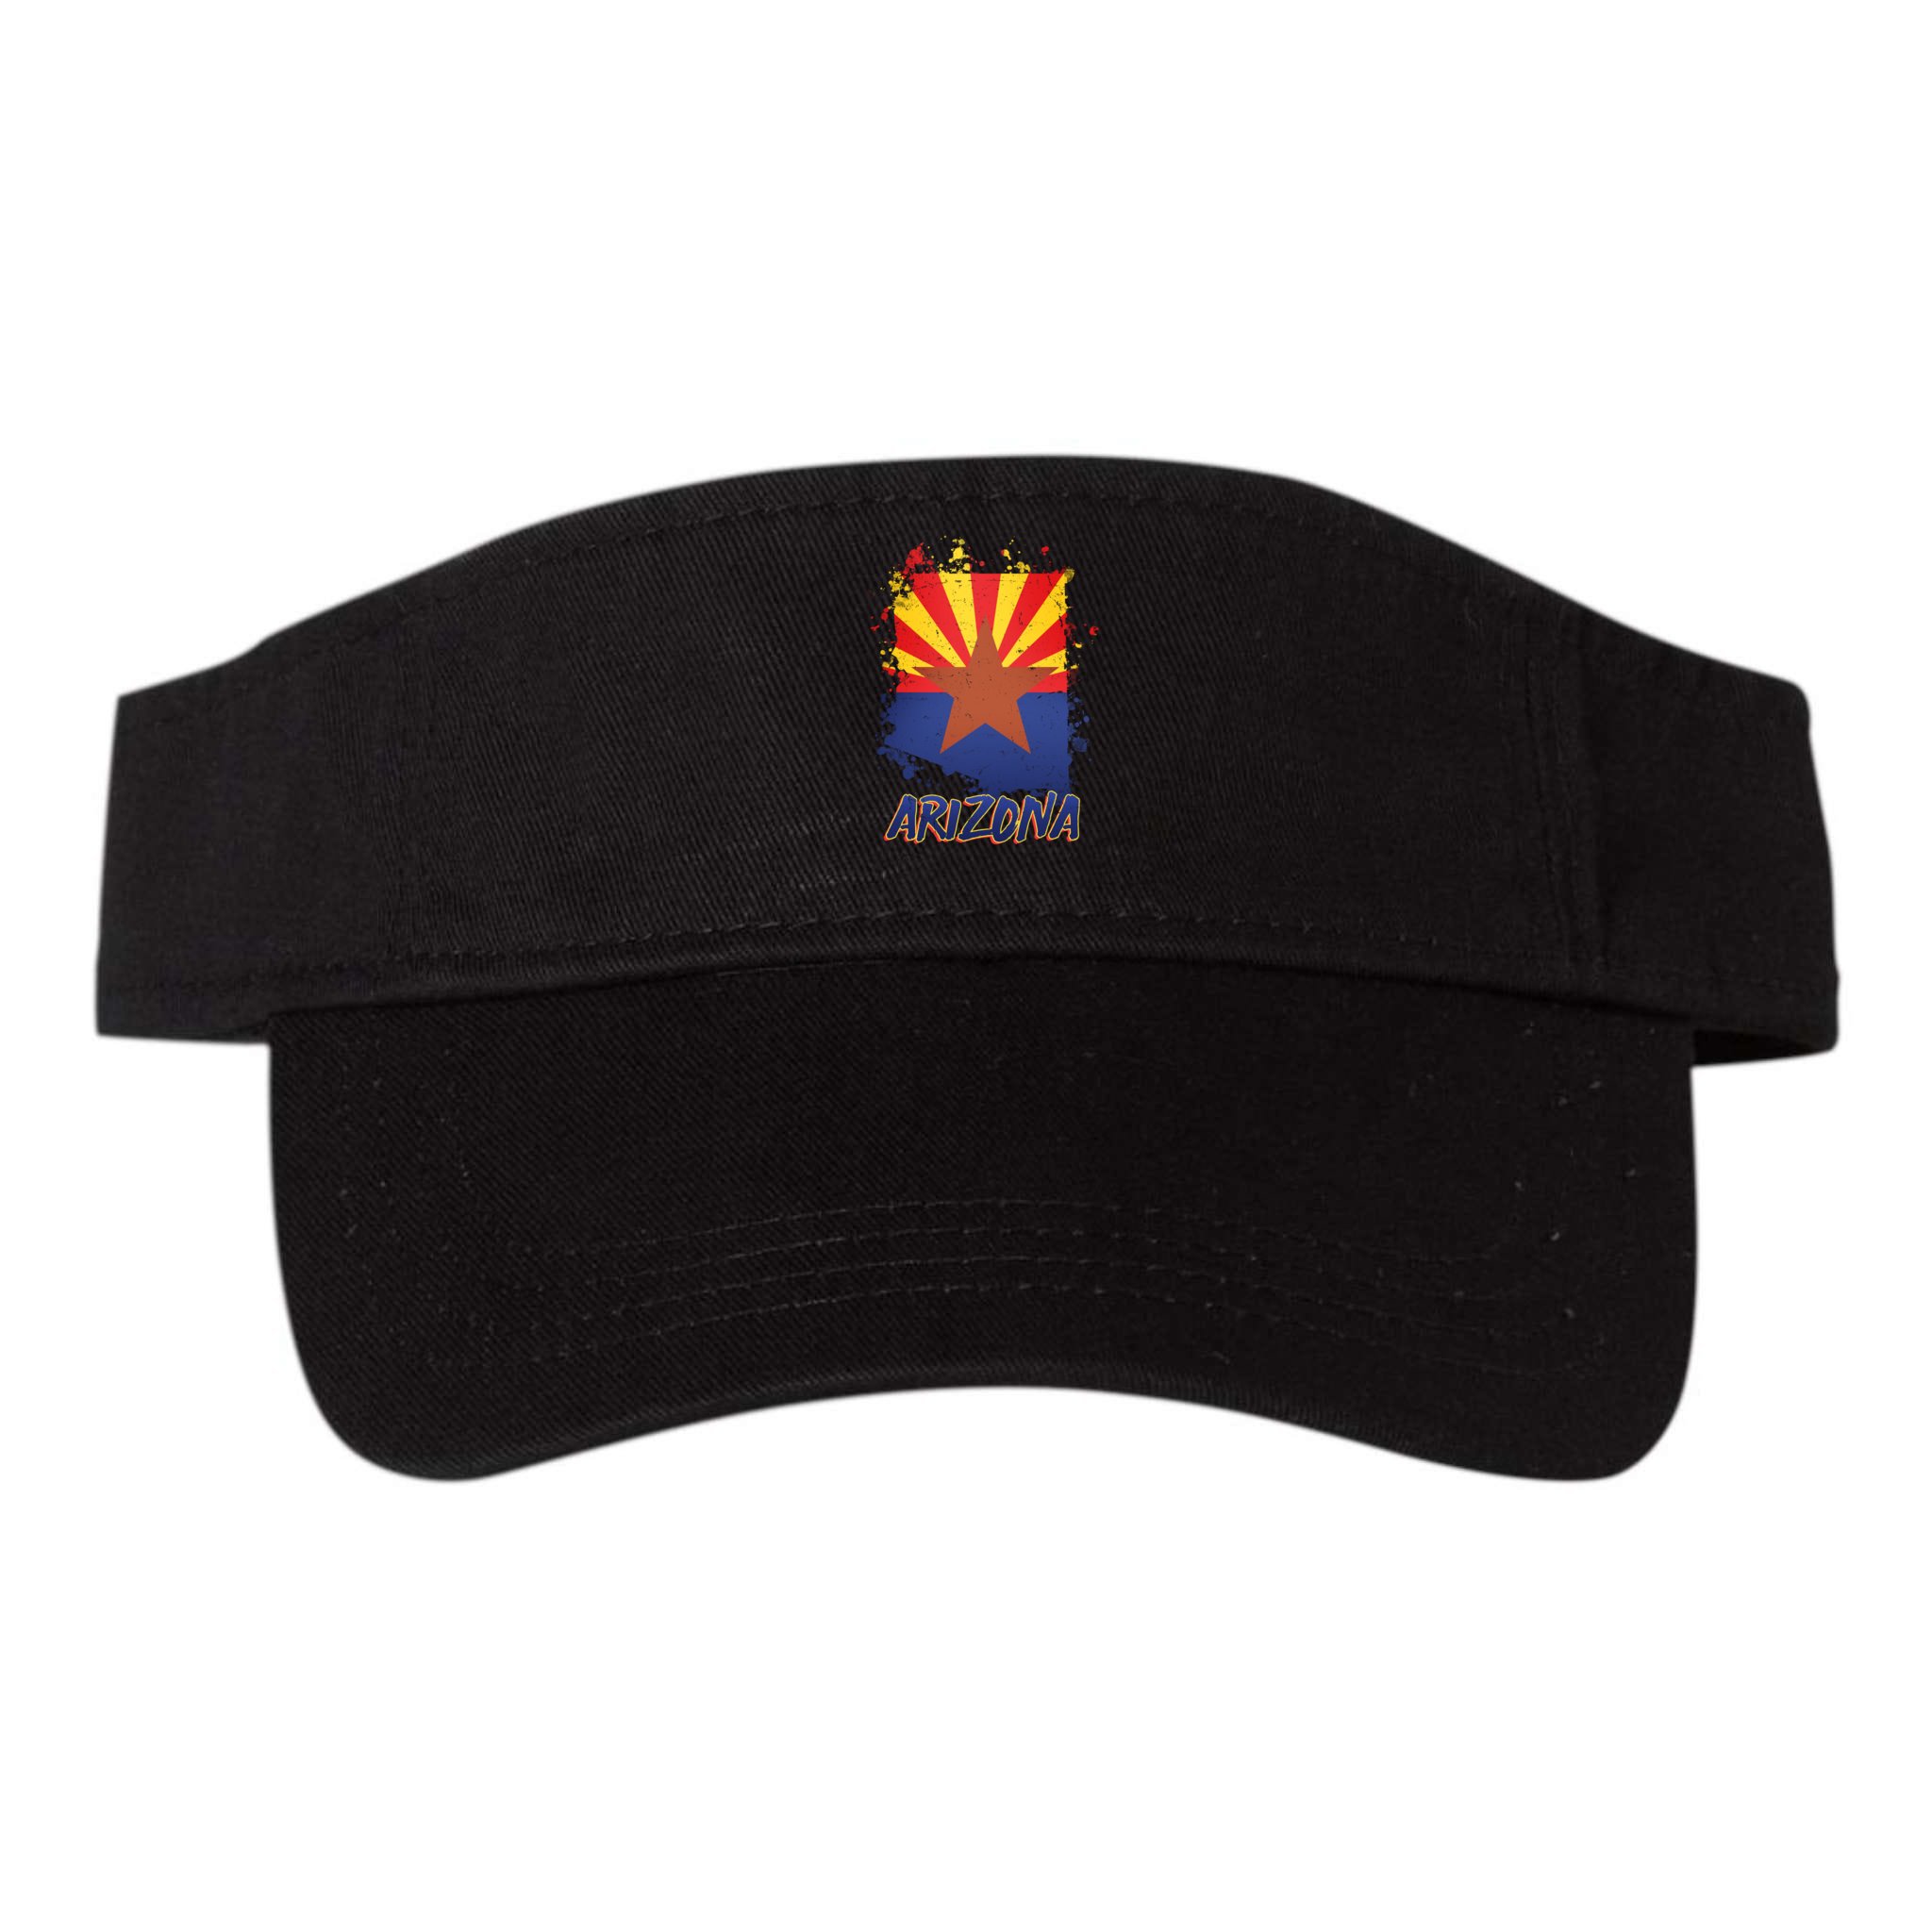 Arizona State Flag Hat, Black Black